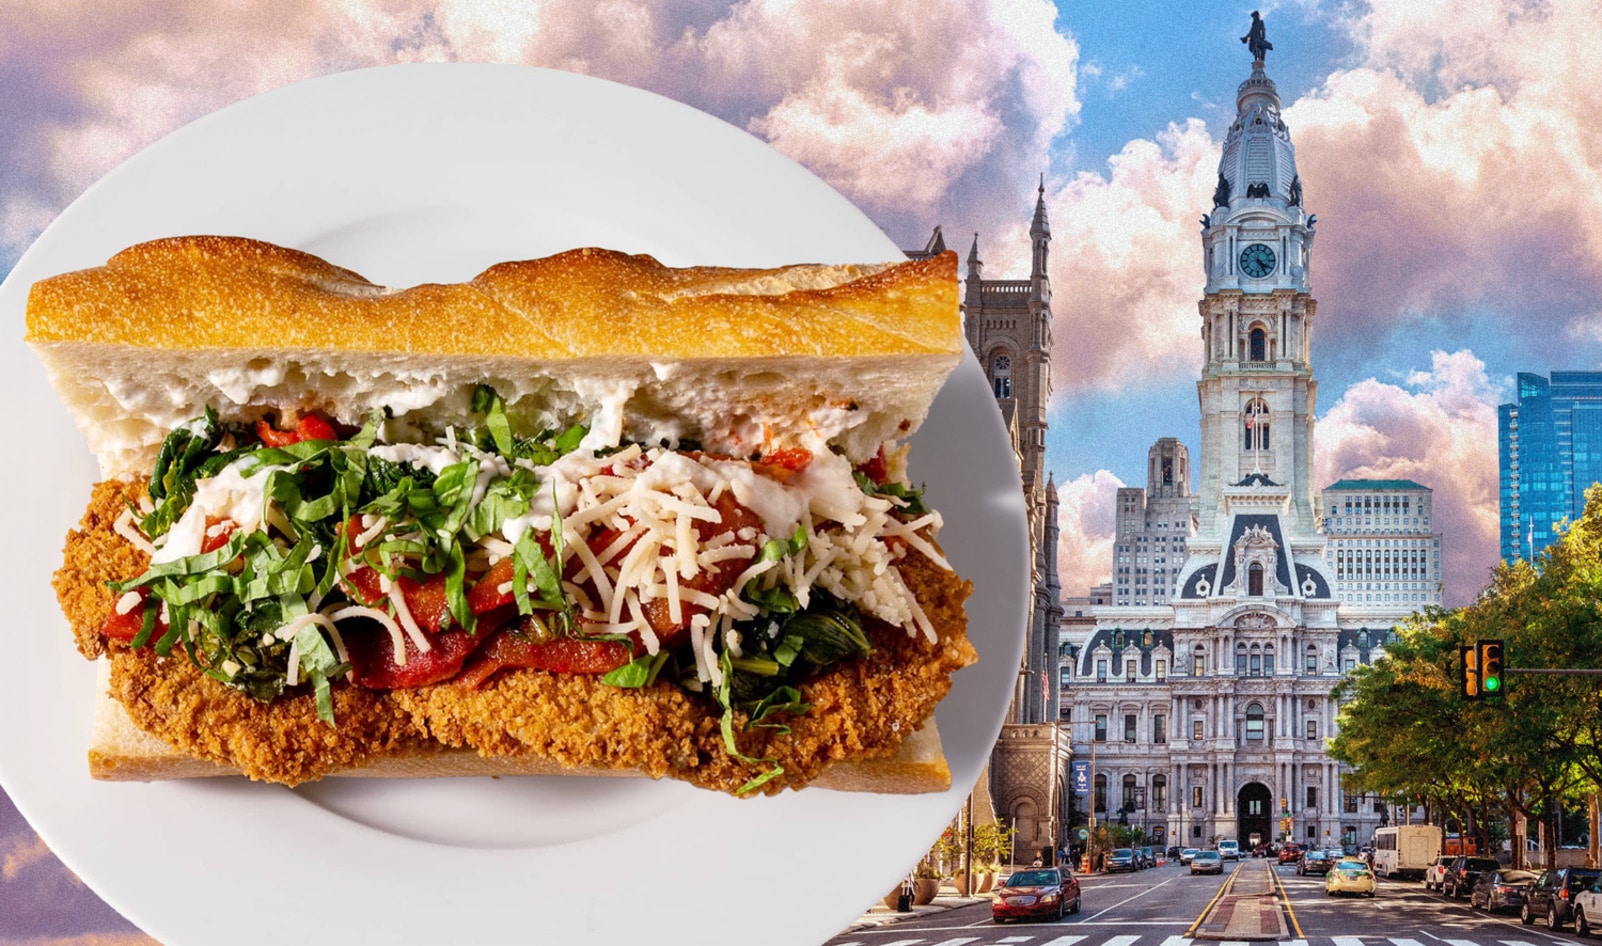 Get Your Fill in Philly: 13 Must-Visit Vegan Restaurants in Philadelphia